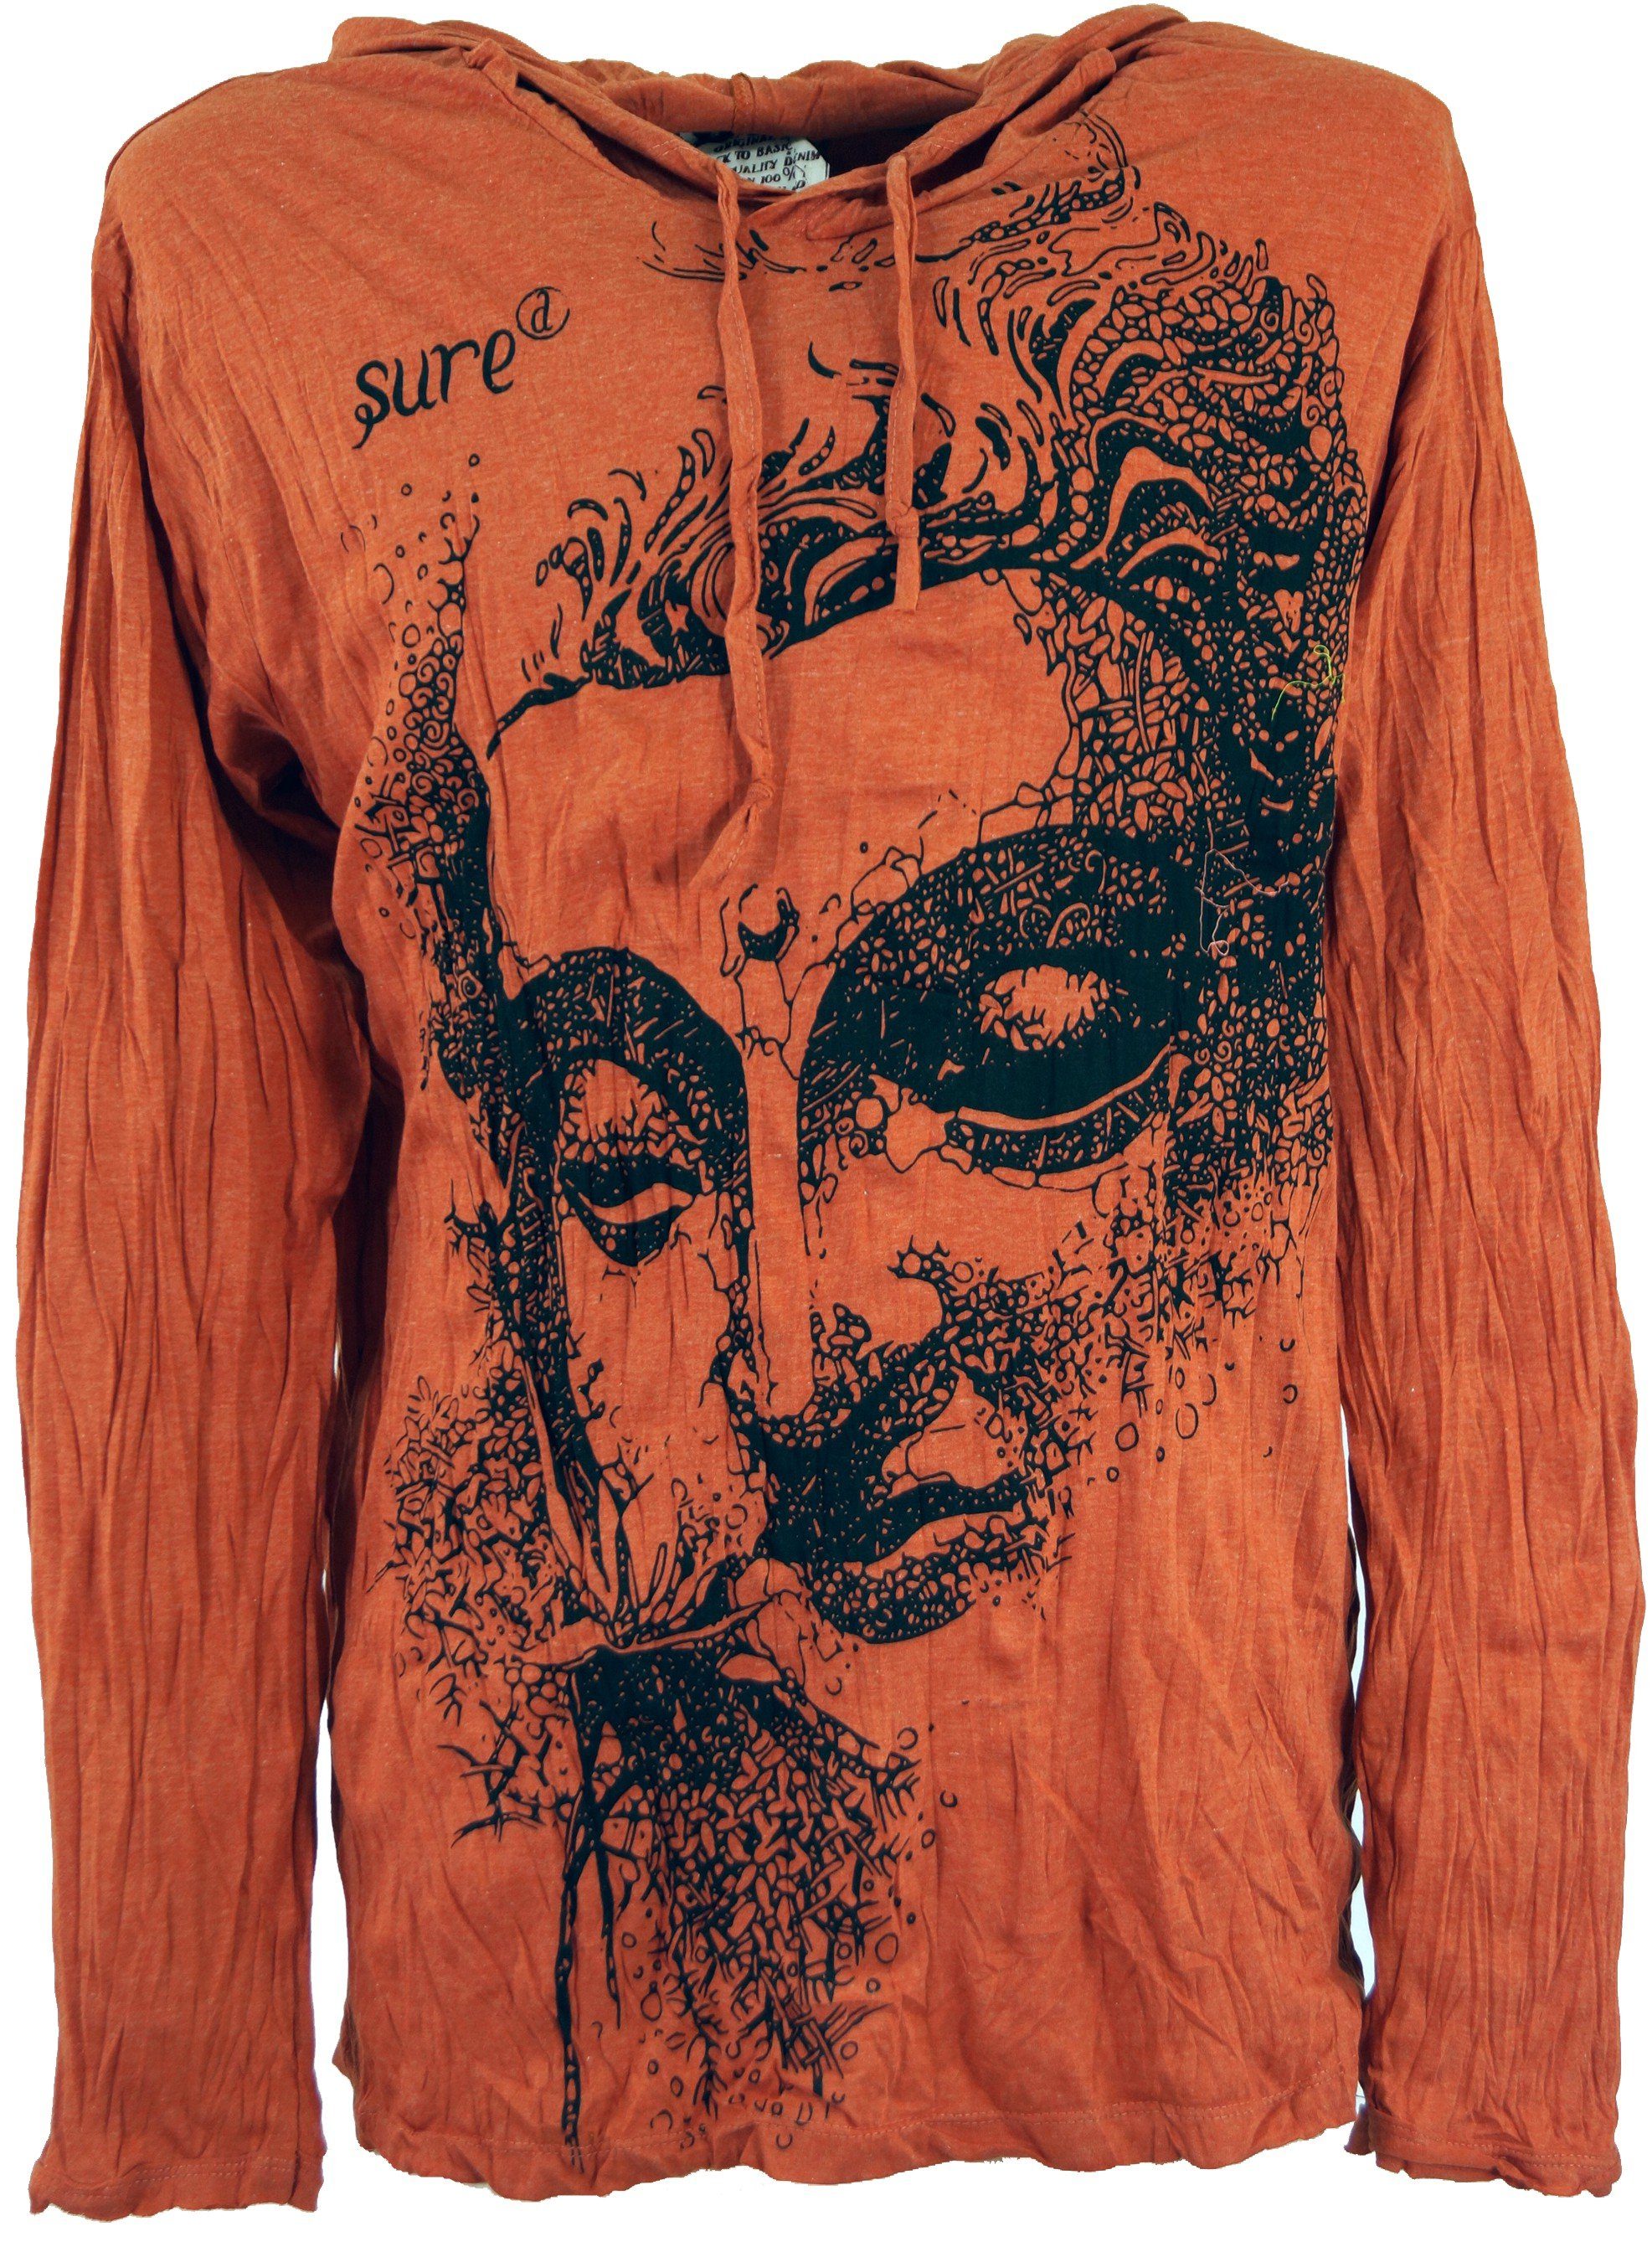 rostorange Buddha.. Sure Dreaming Bekleidung Style, Langarmshirt, T-Shirt alternative Kapuzenshirt Festival, Goa Guru-Shop